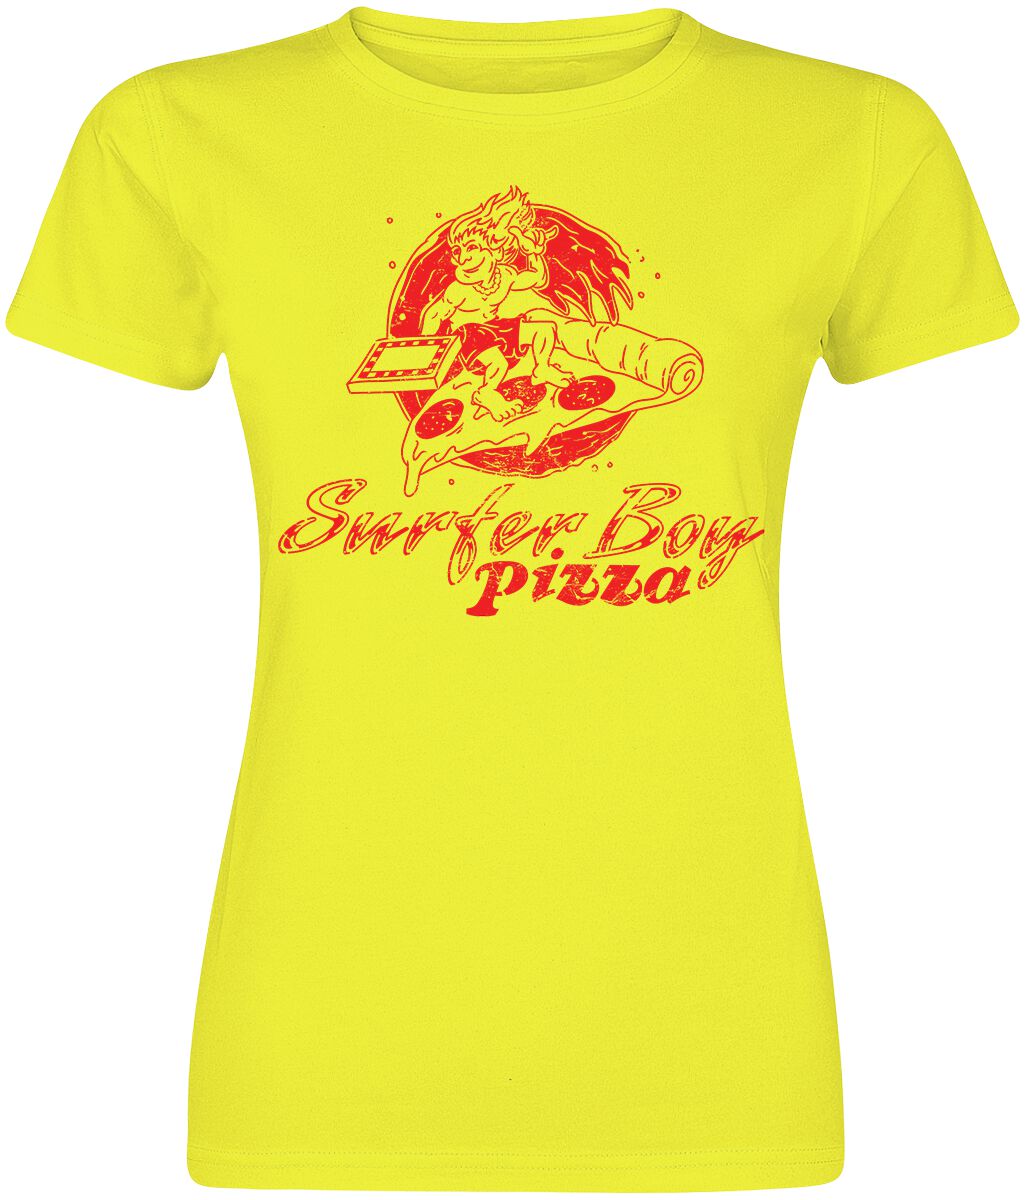 Stranger Things Surfer Boy Pizza T-Shirt yellow